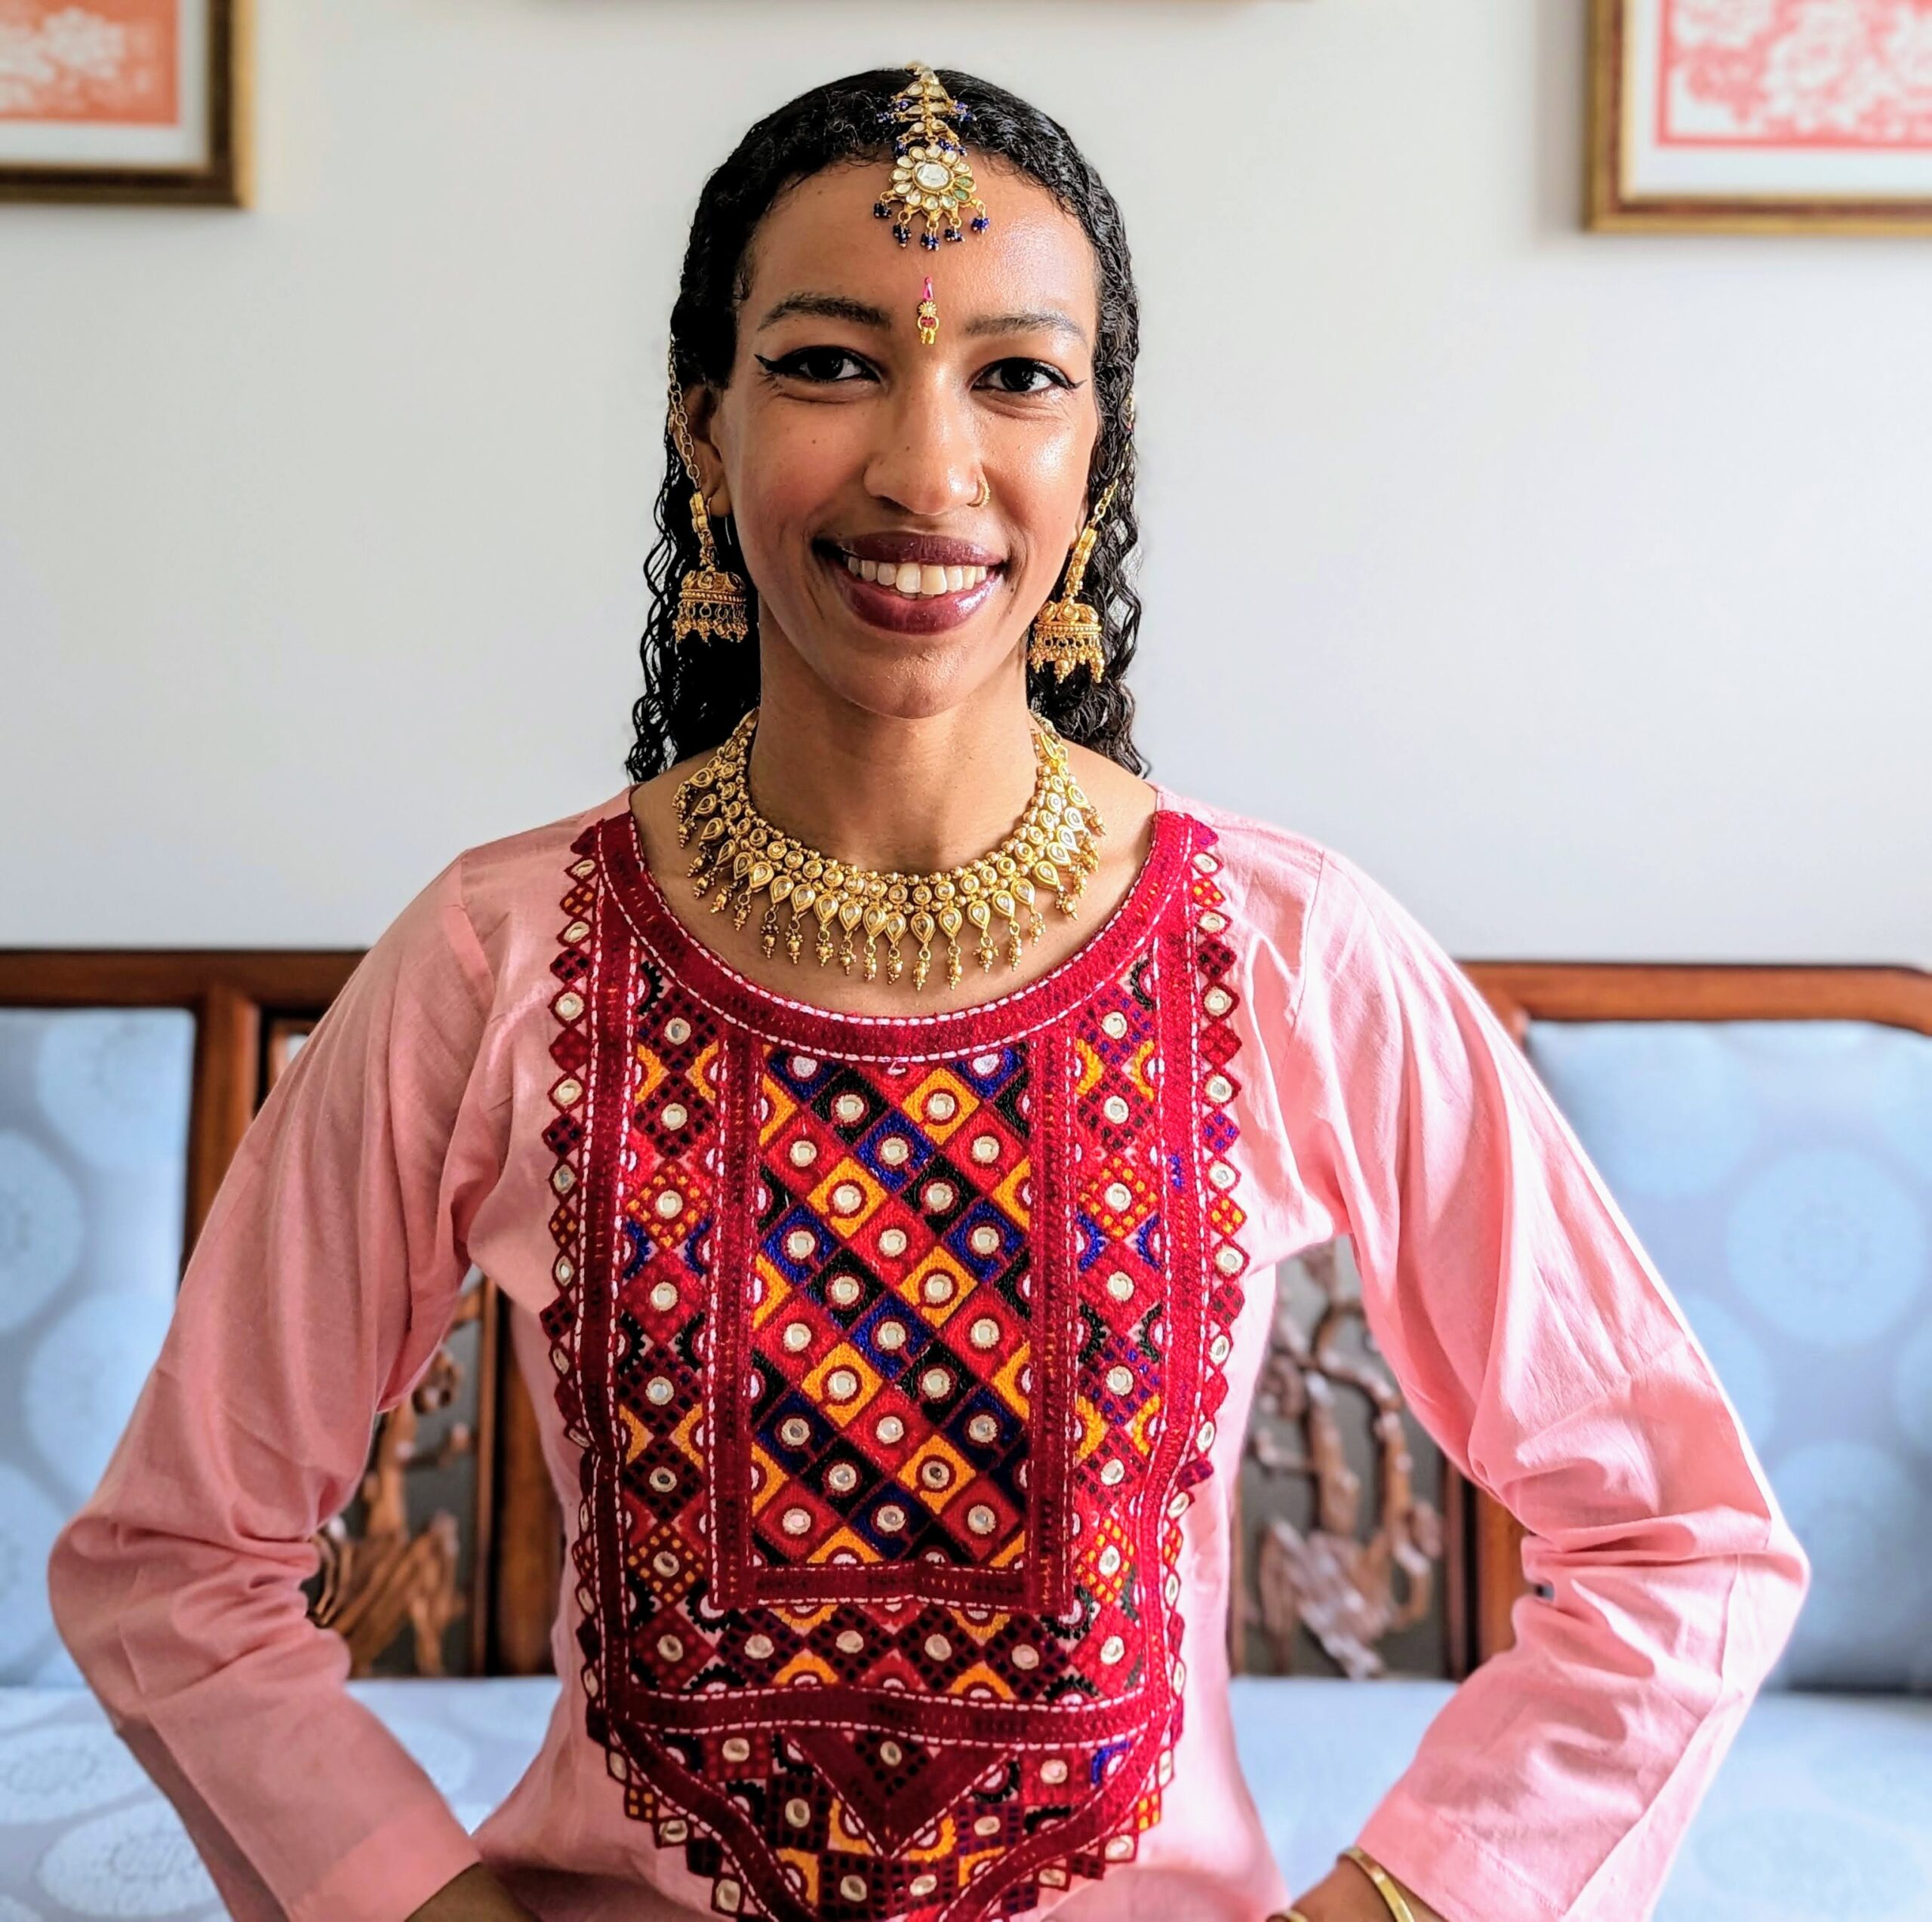 Girl wearing Rajasthani costume.